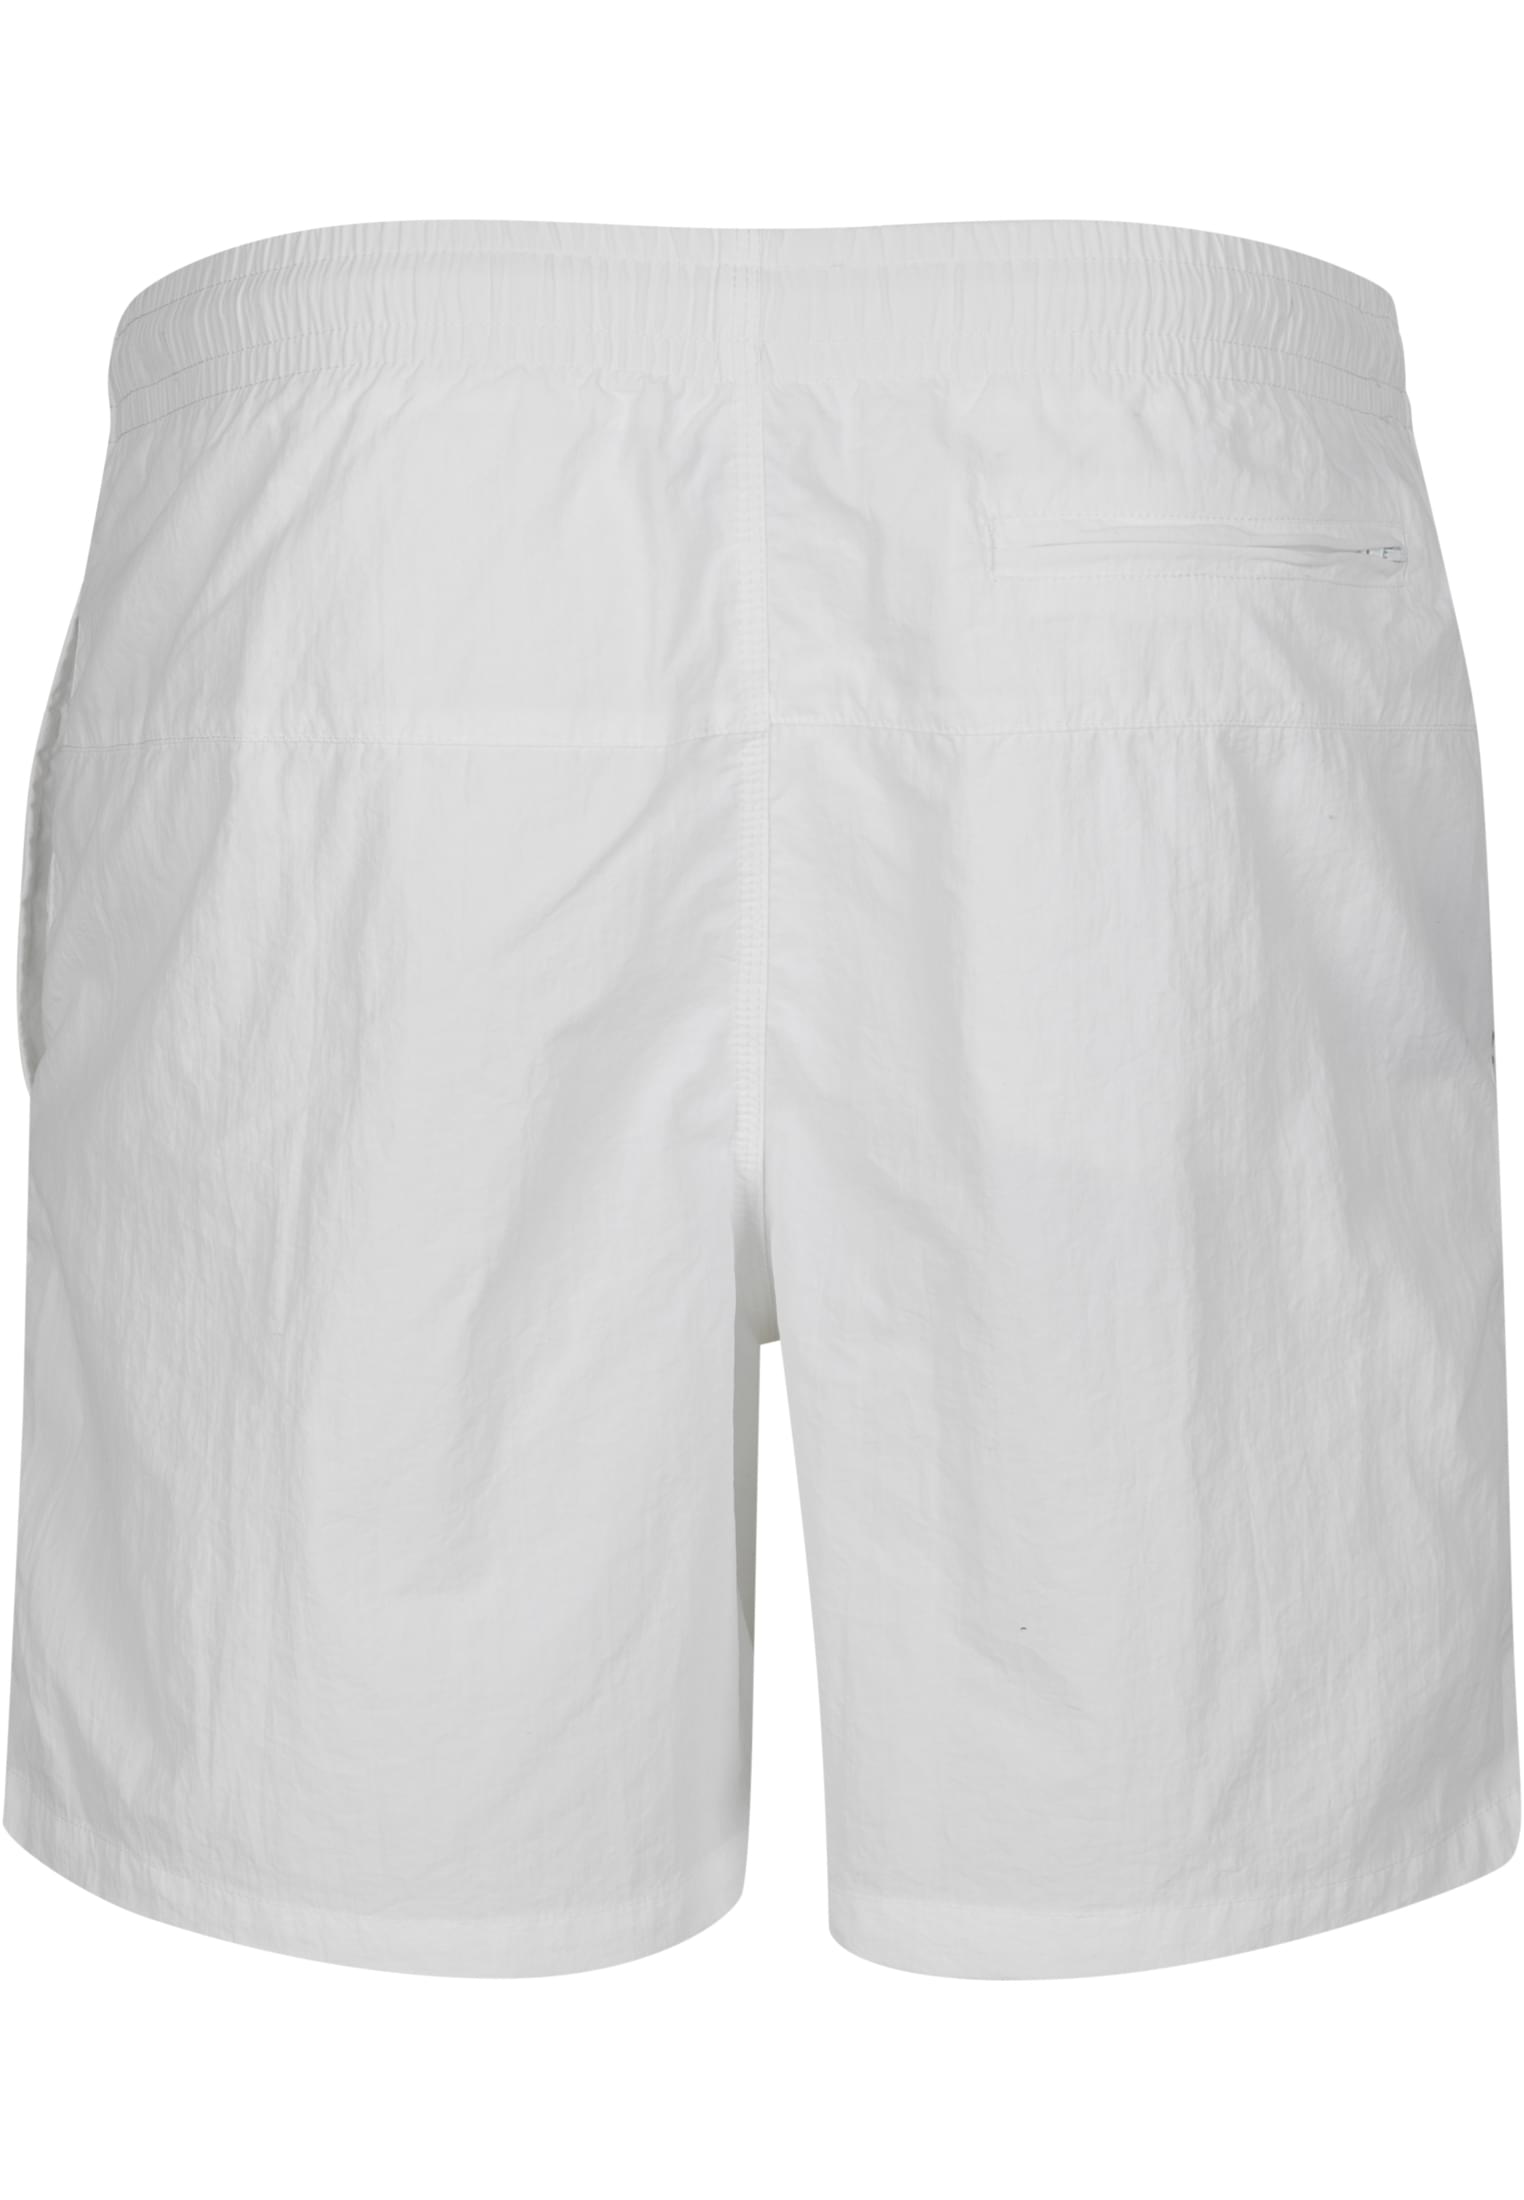 Plus Size Block Swim Shorts in Farbe white